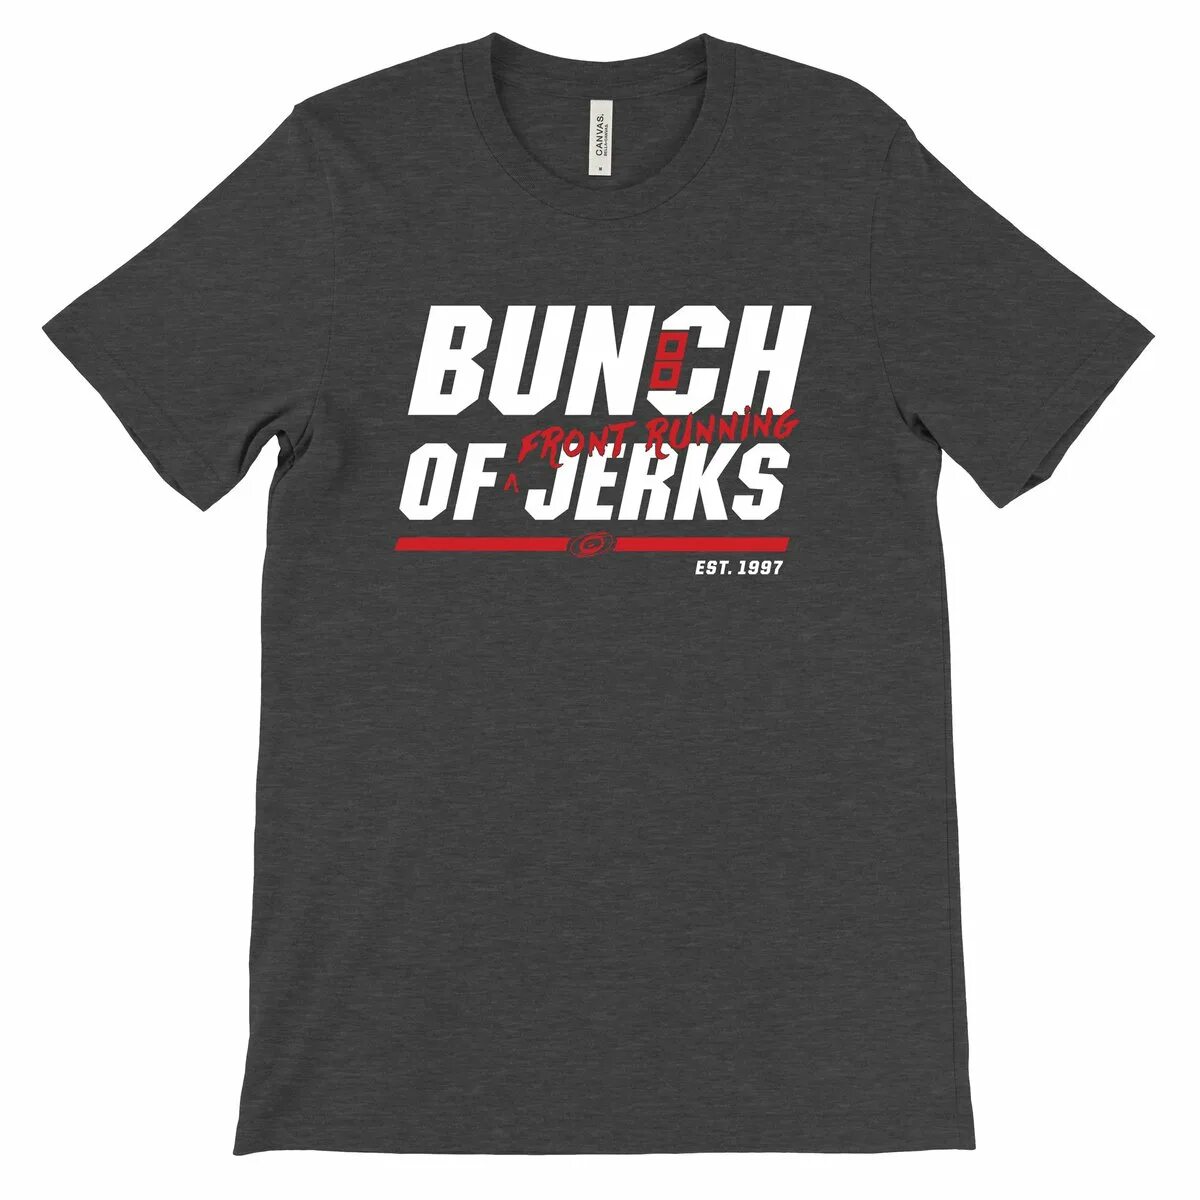 Old fans. Bunch of jerks Carolina. Футболка jerk. Don't be a jerk футболка. A bunch of jerks.